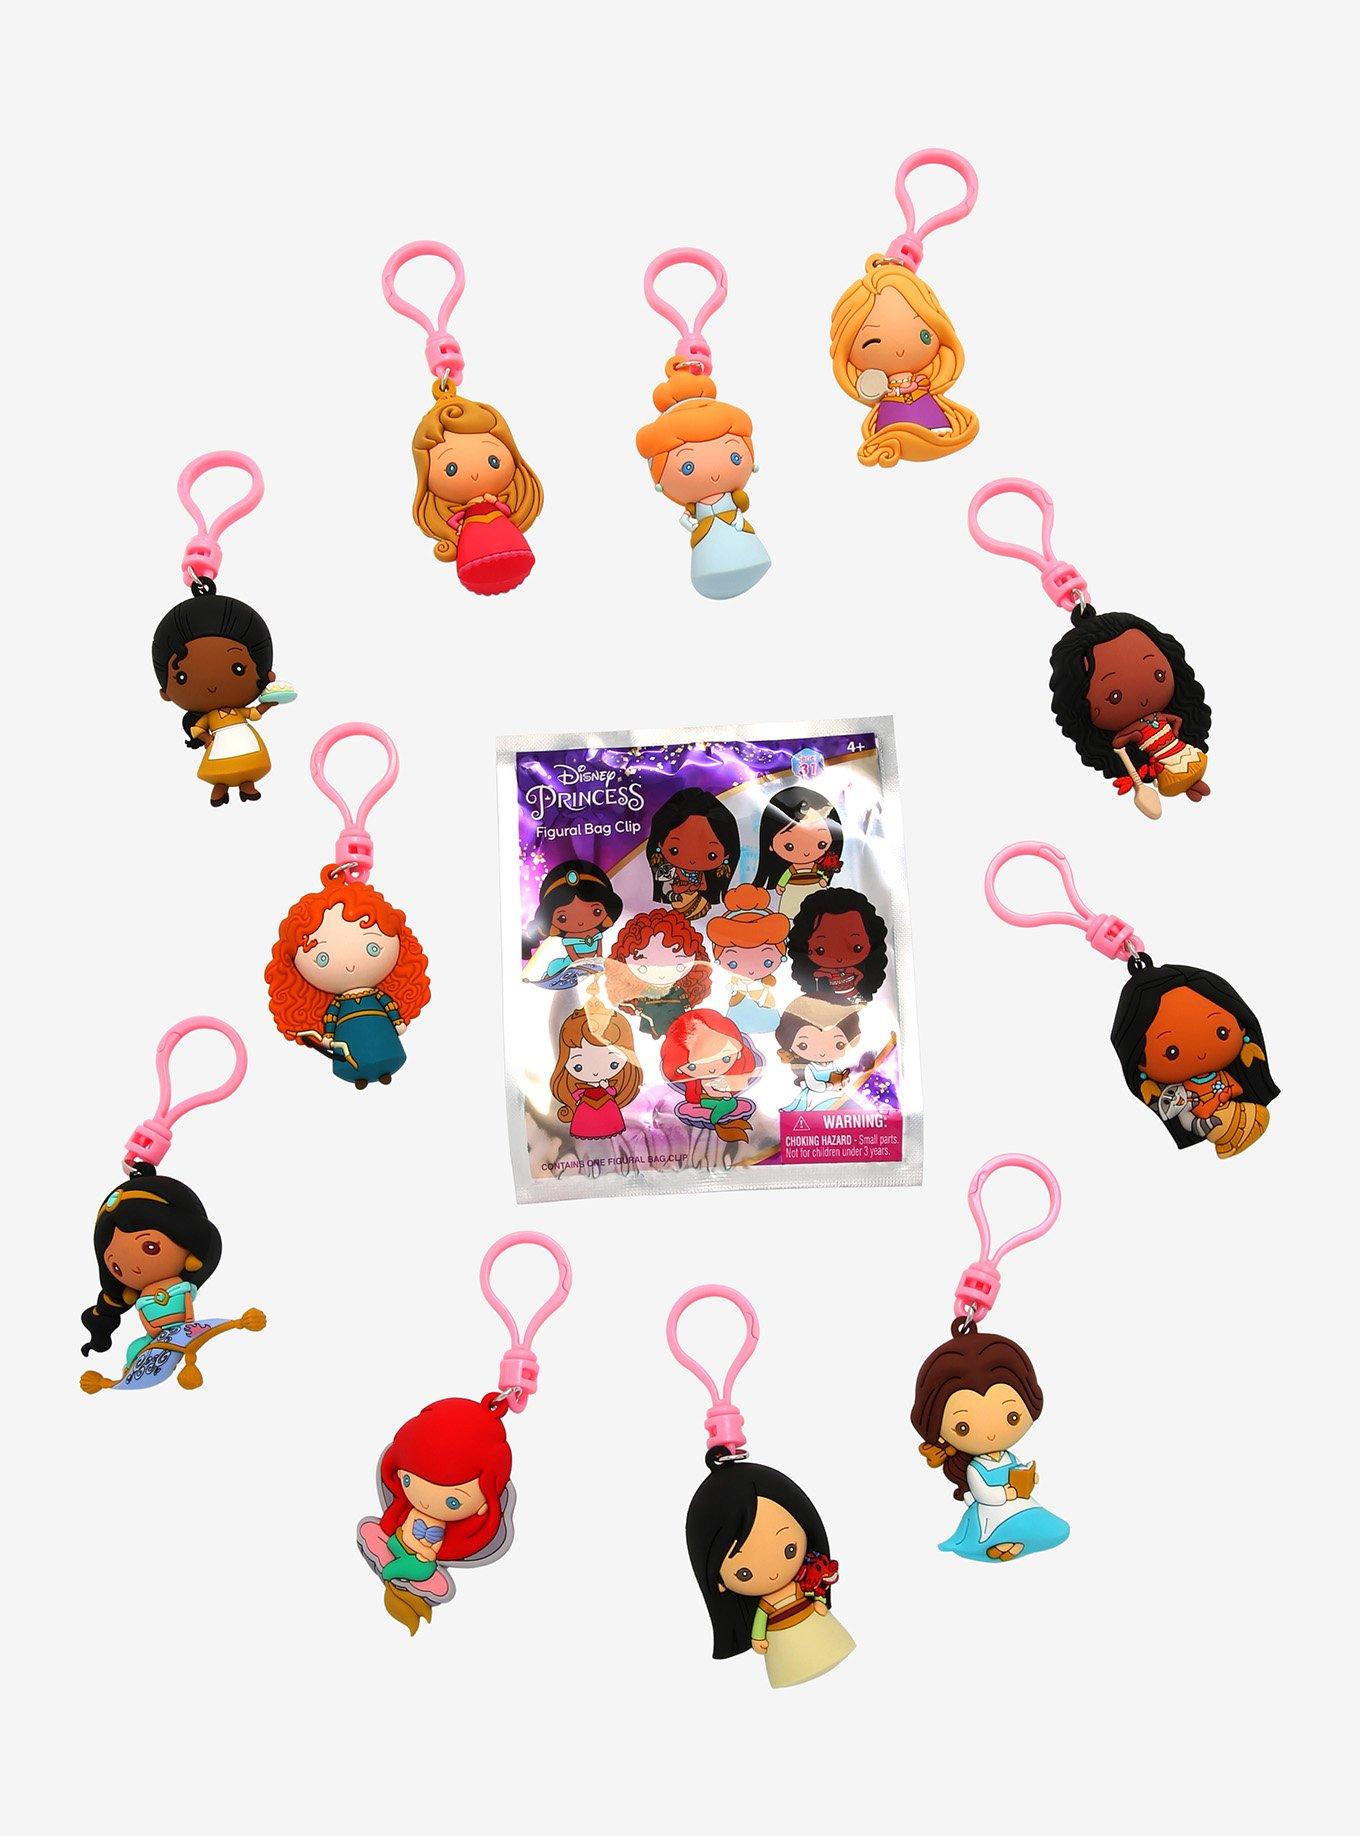 Disney Princess figural bag clip ✨👑 #disney #disneyprincess